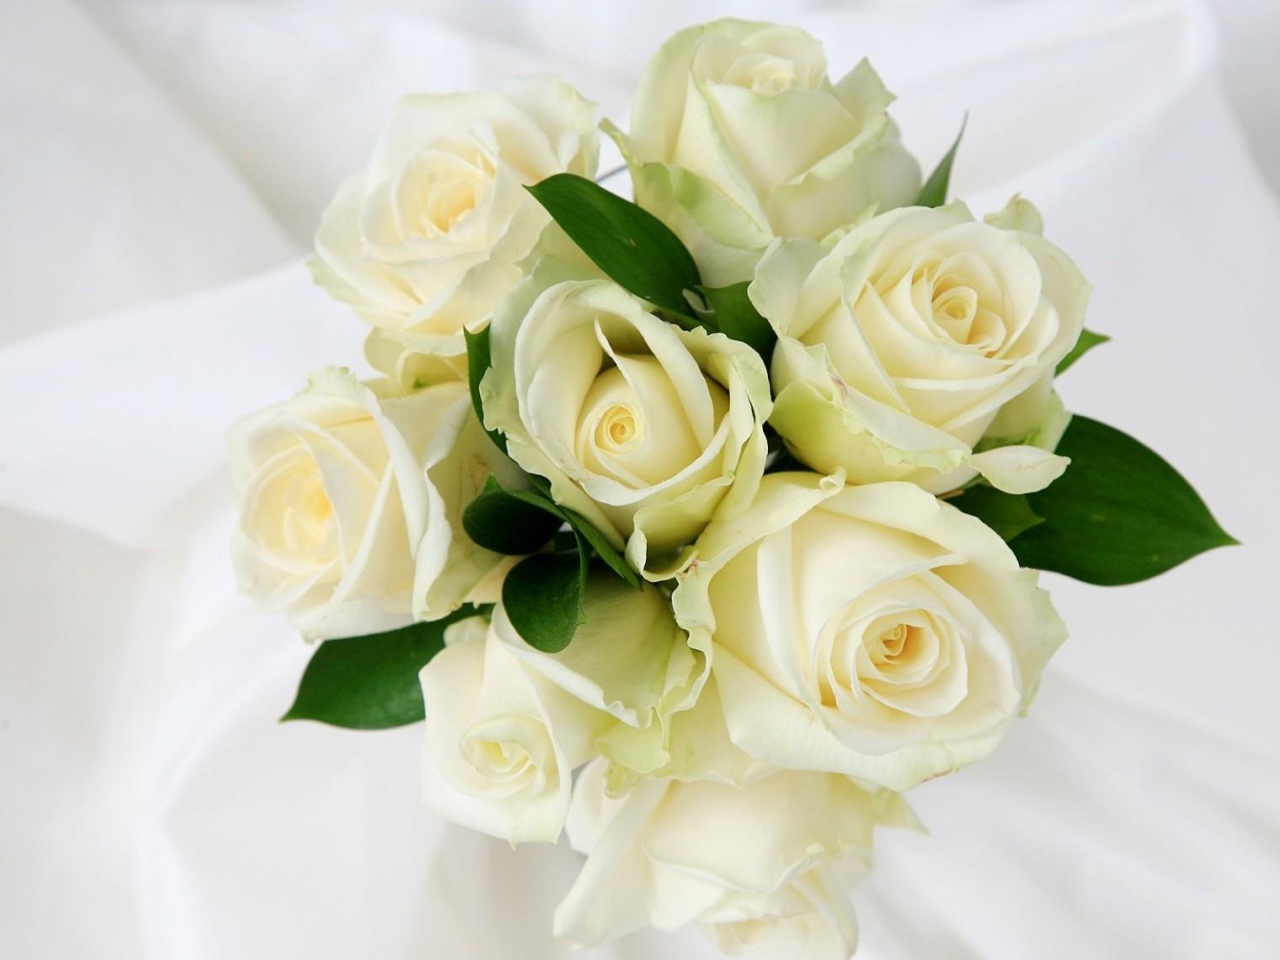 50 Gambar Mawar Putih Yang Cantik ~ Ayeey.com